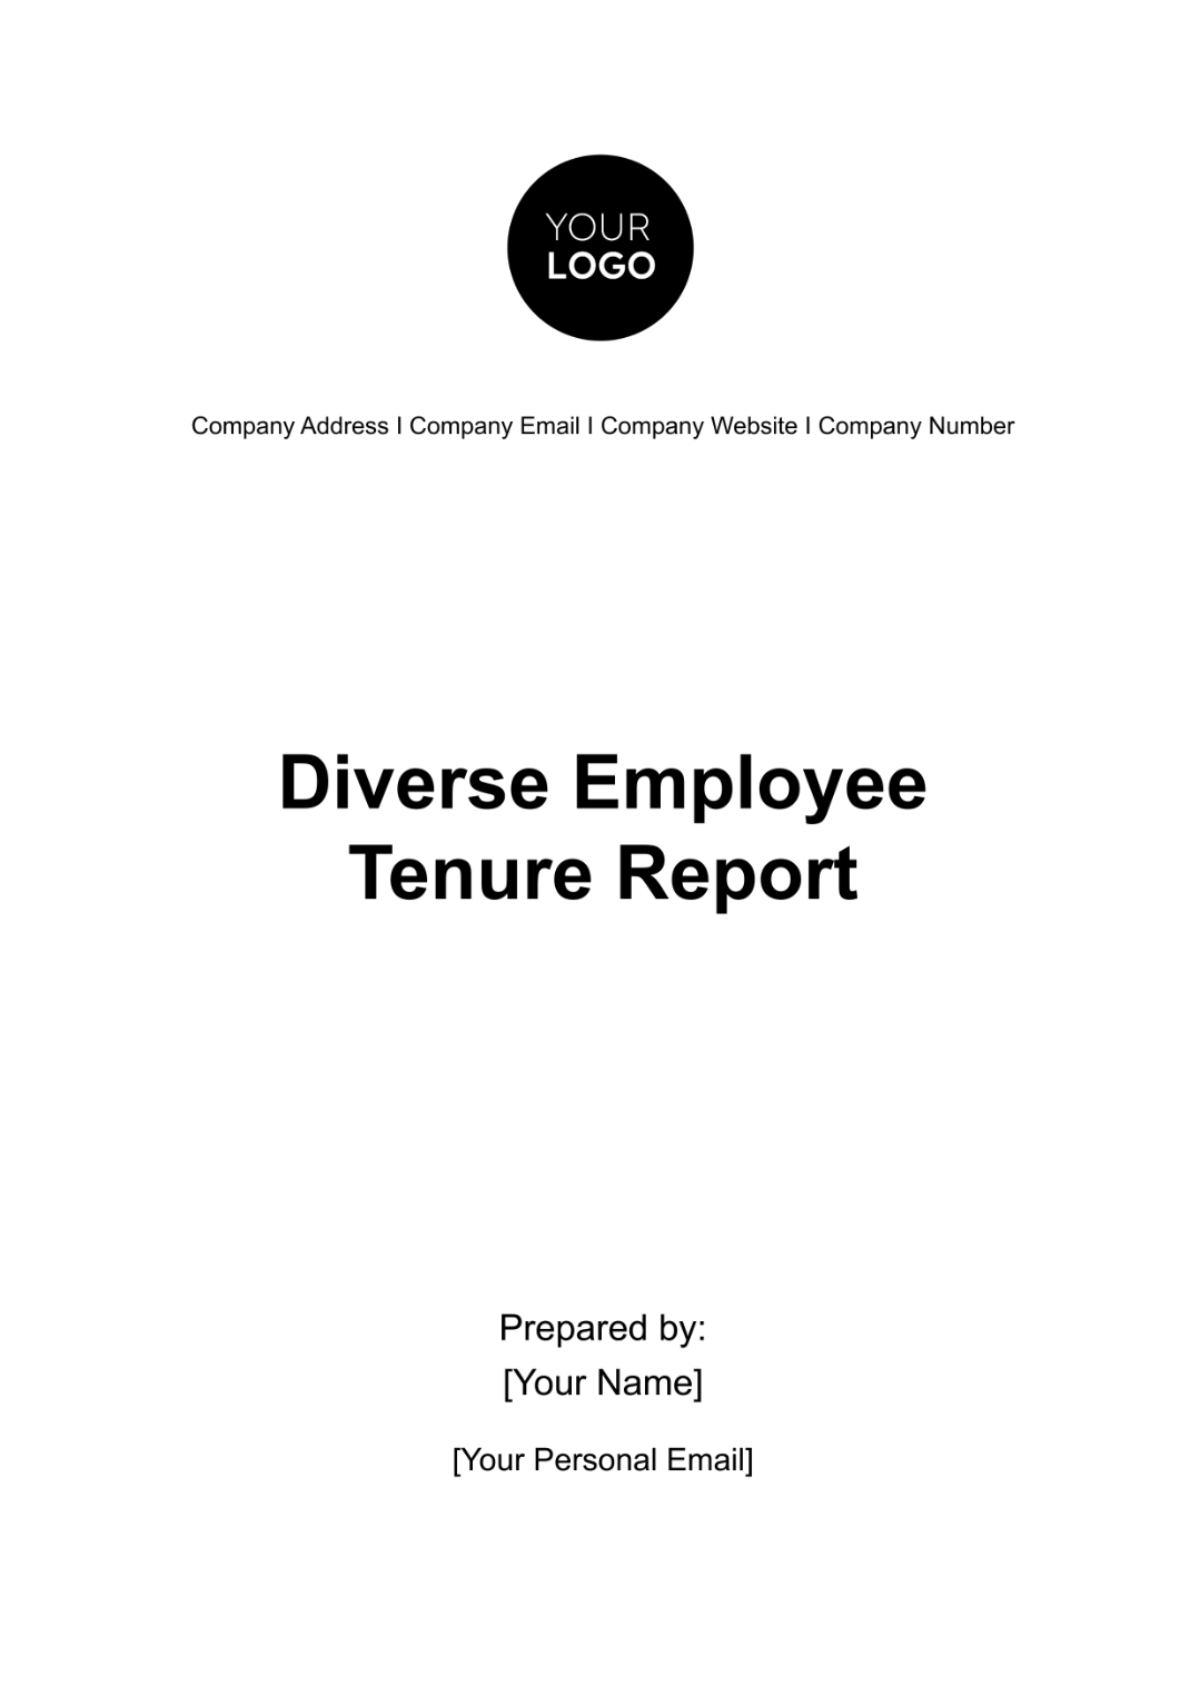 Free Diverse Employee Tenure Report HR Template